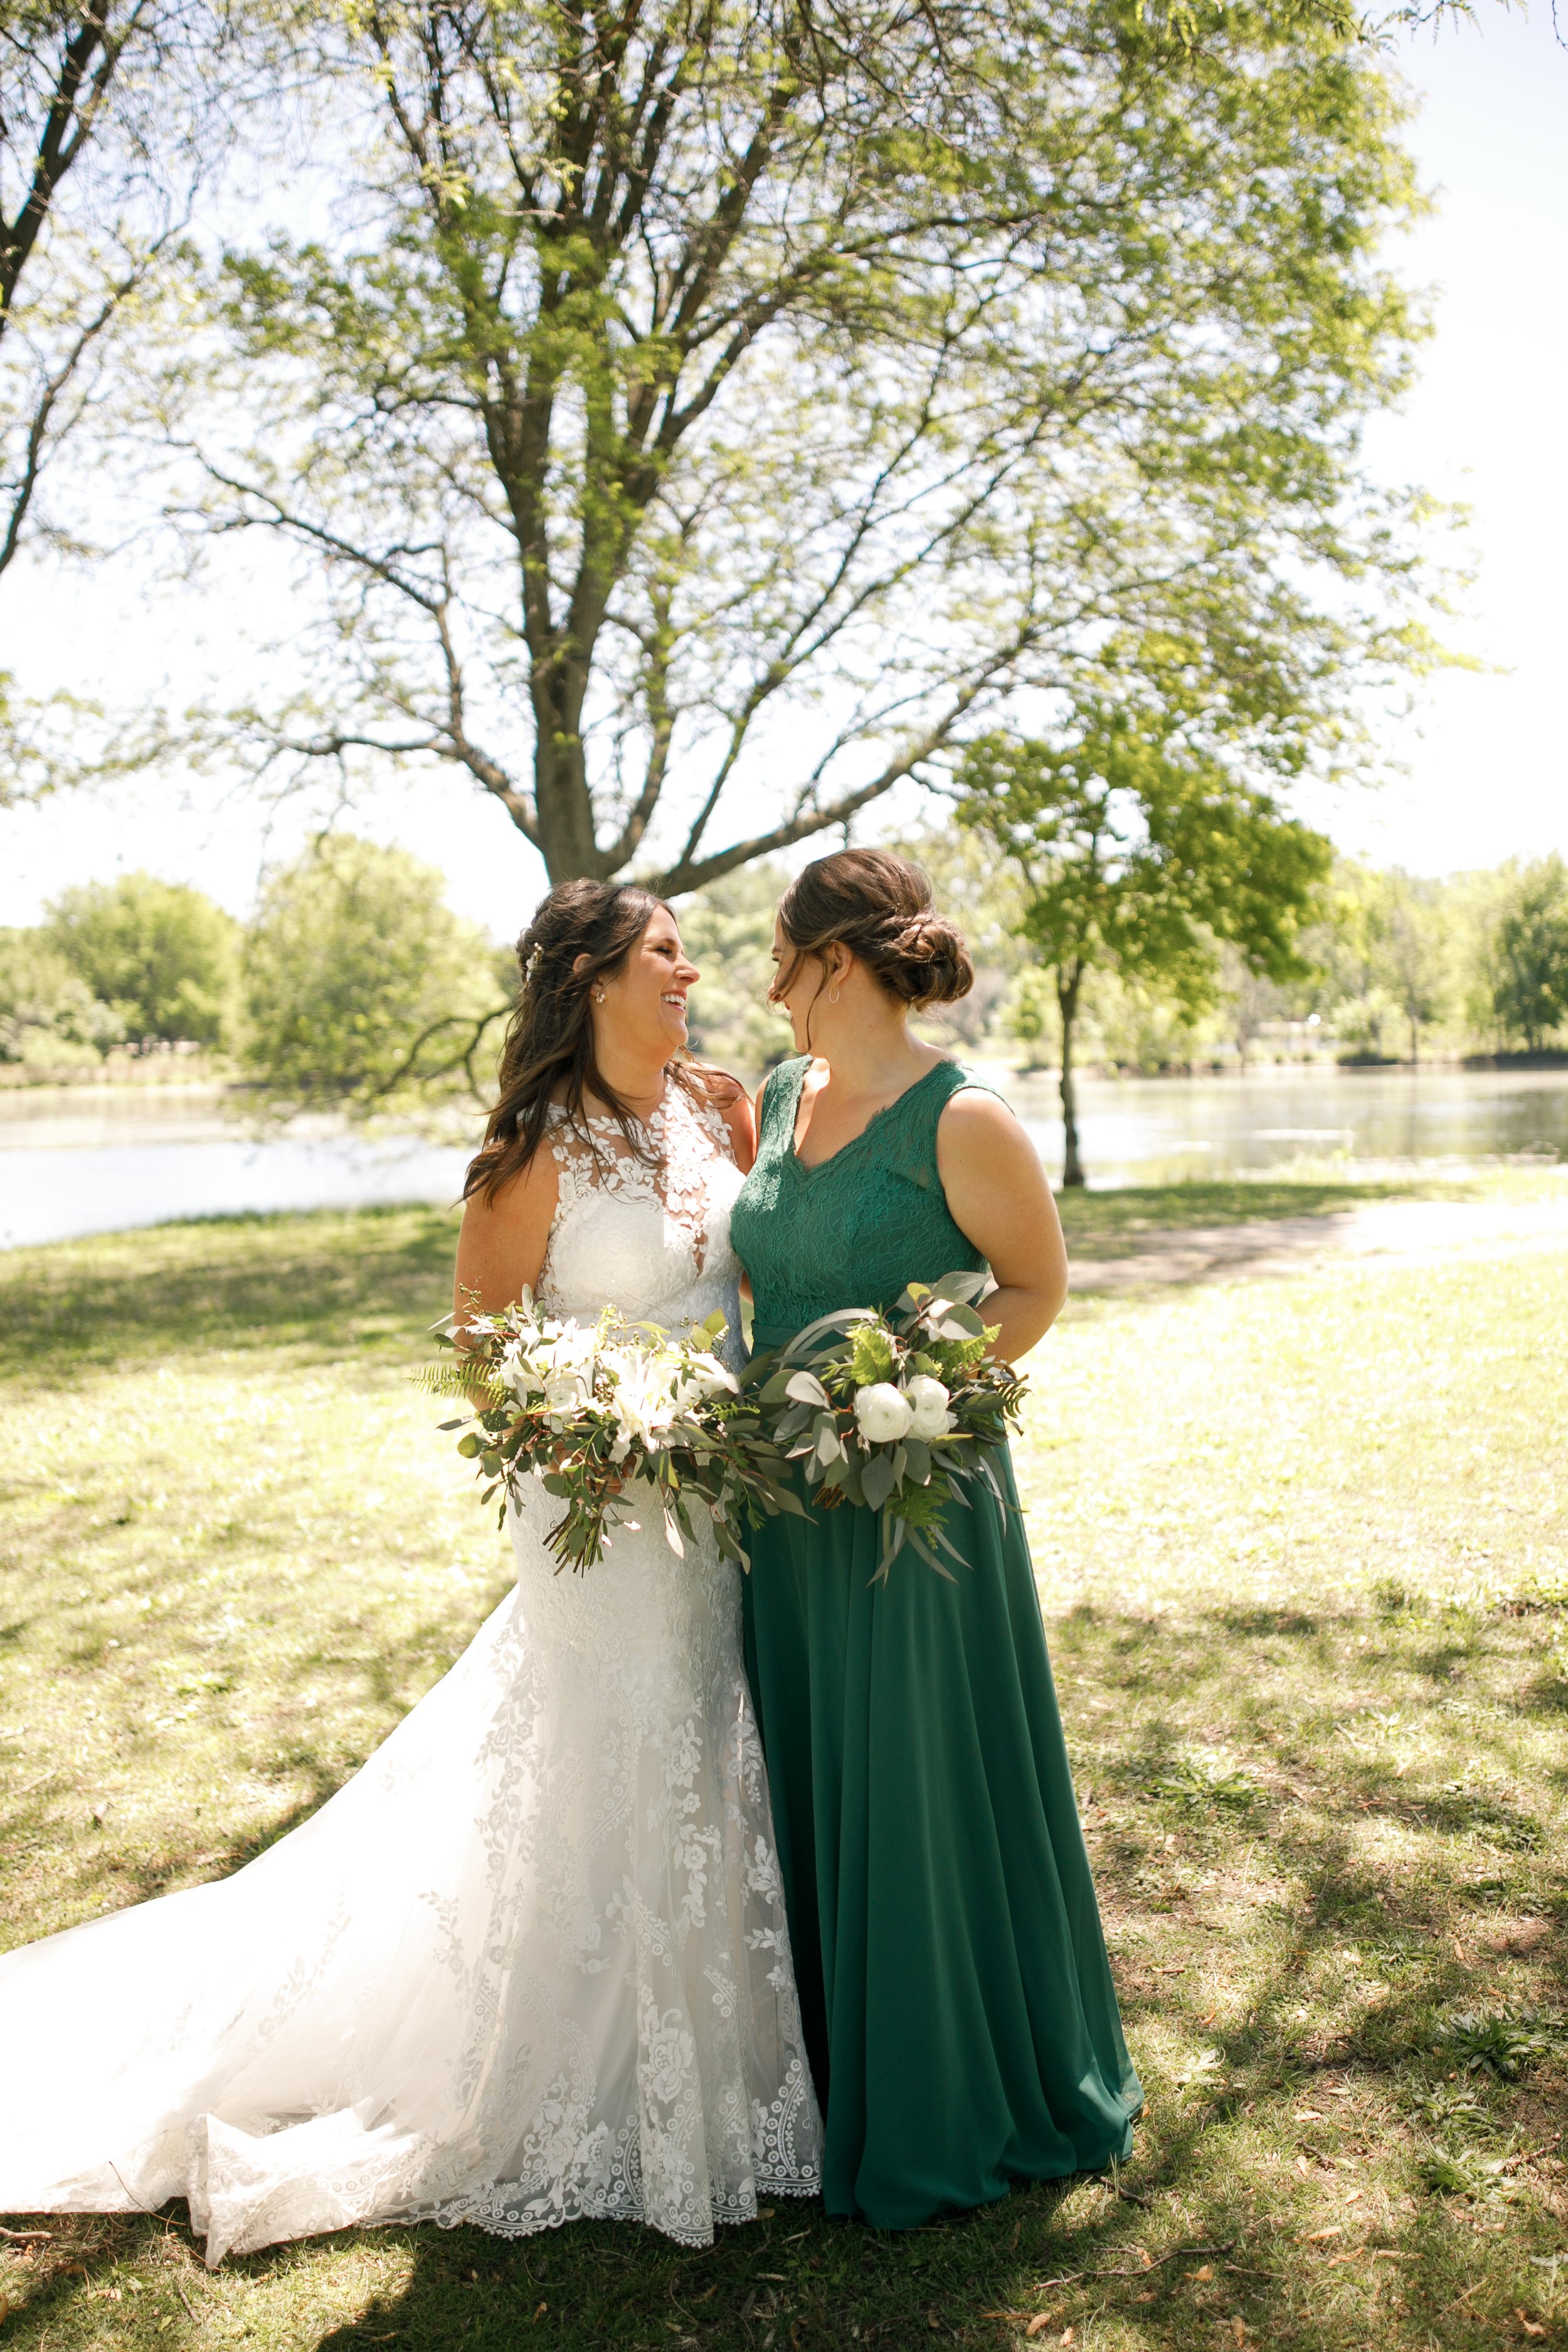 Sparta Wedding Photographer - Grand Rapids Wedding Photographer - Backyard Wedding - Jessica Darling - Ang and Kyle Wedding - J Darling Photo32.jpg